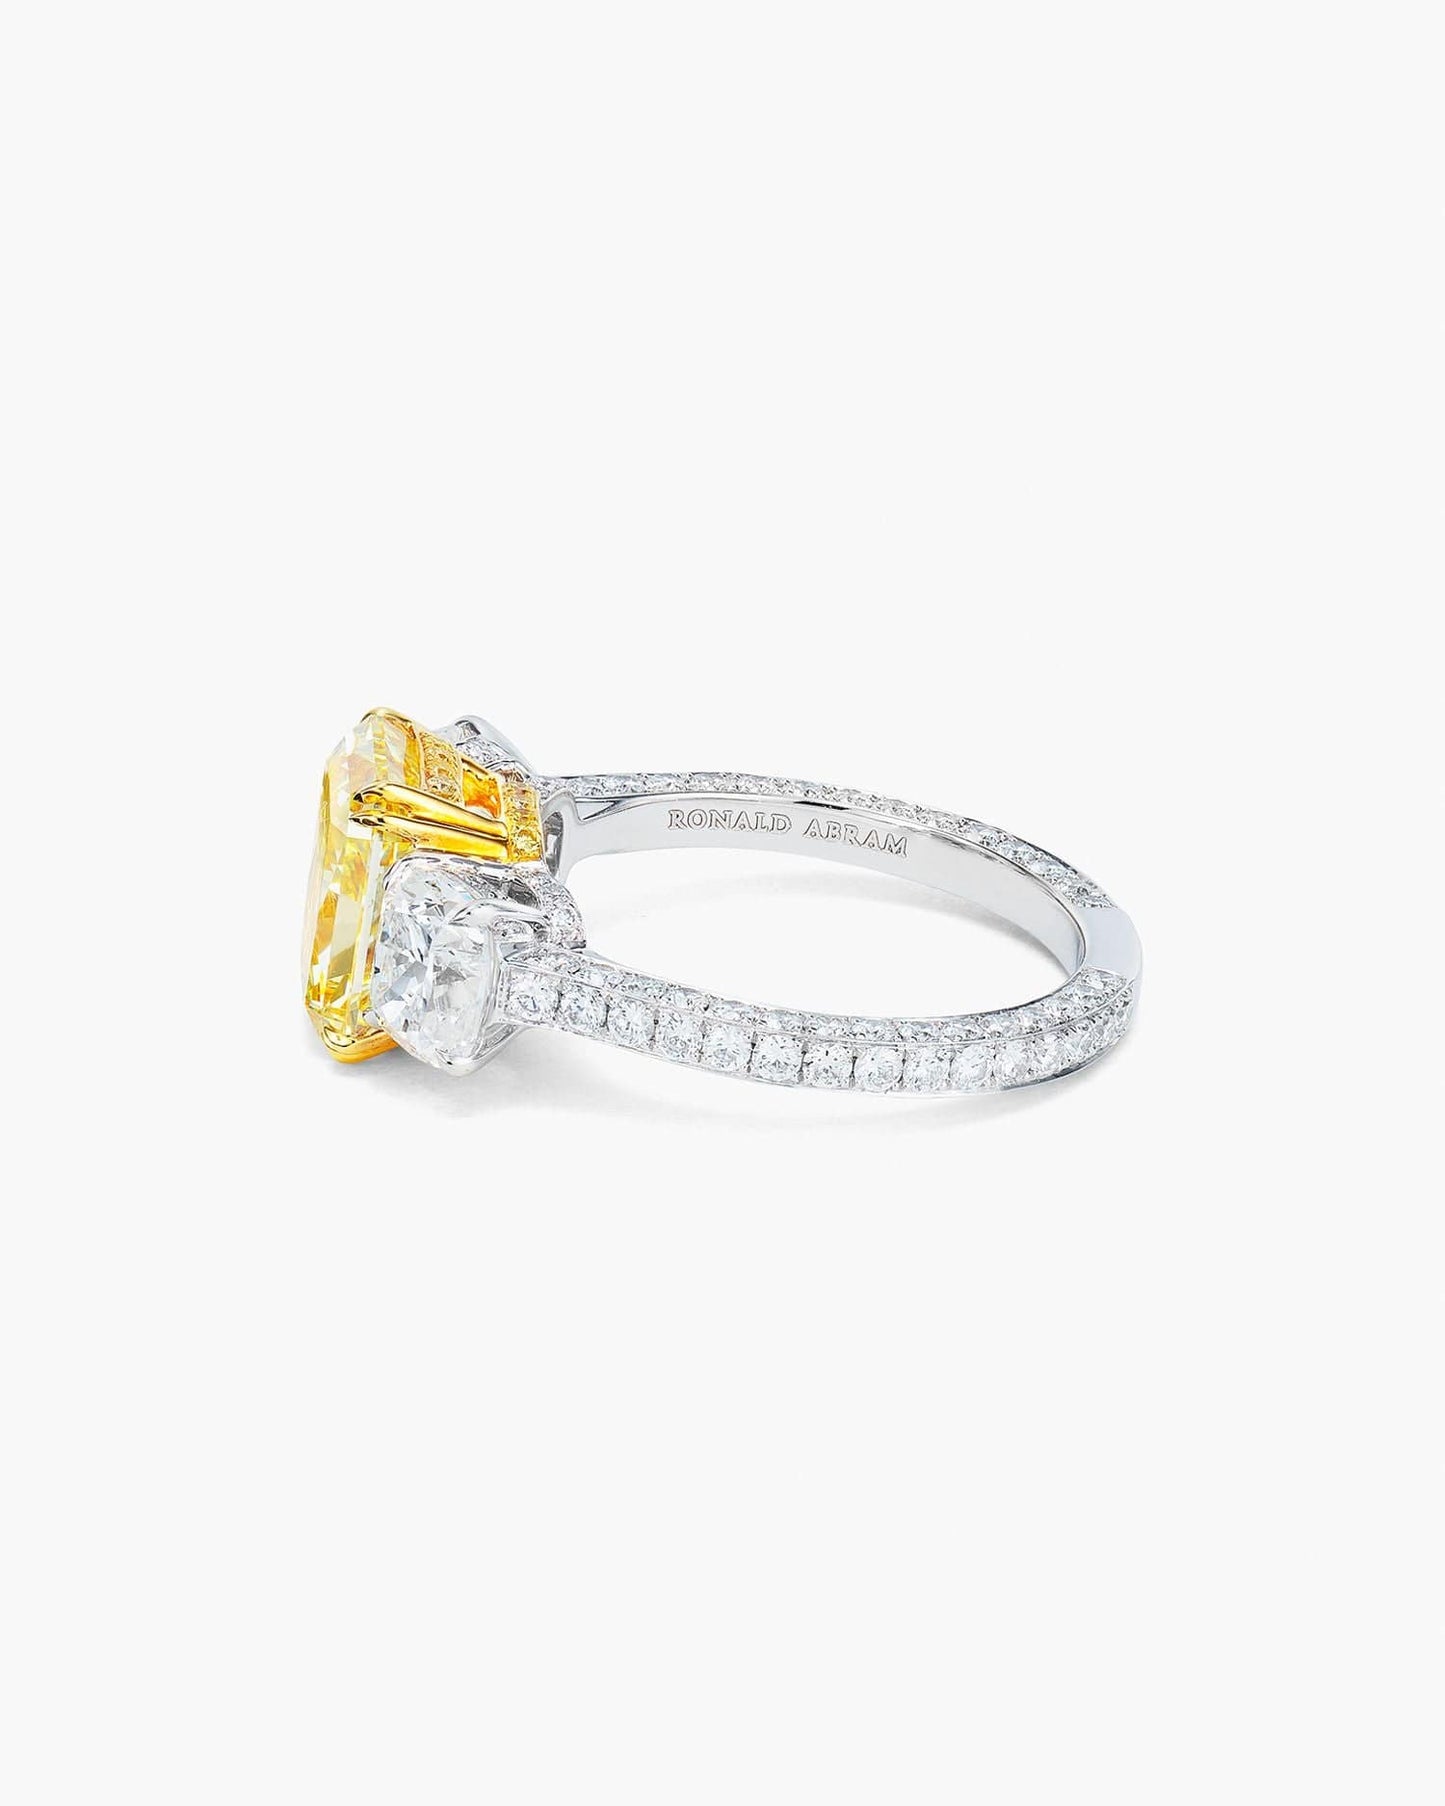 3.21 carat Radiant Cut Yellow and White Diamond Ring